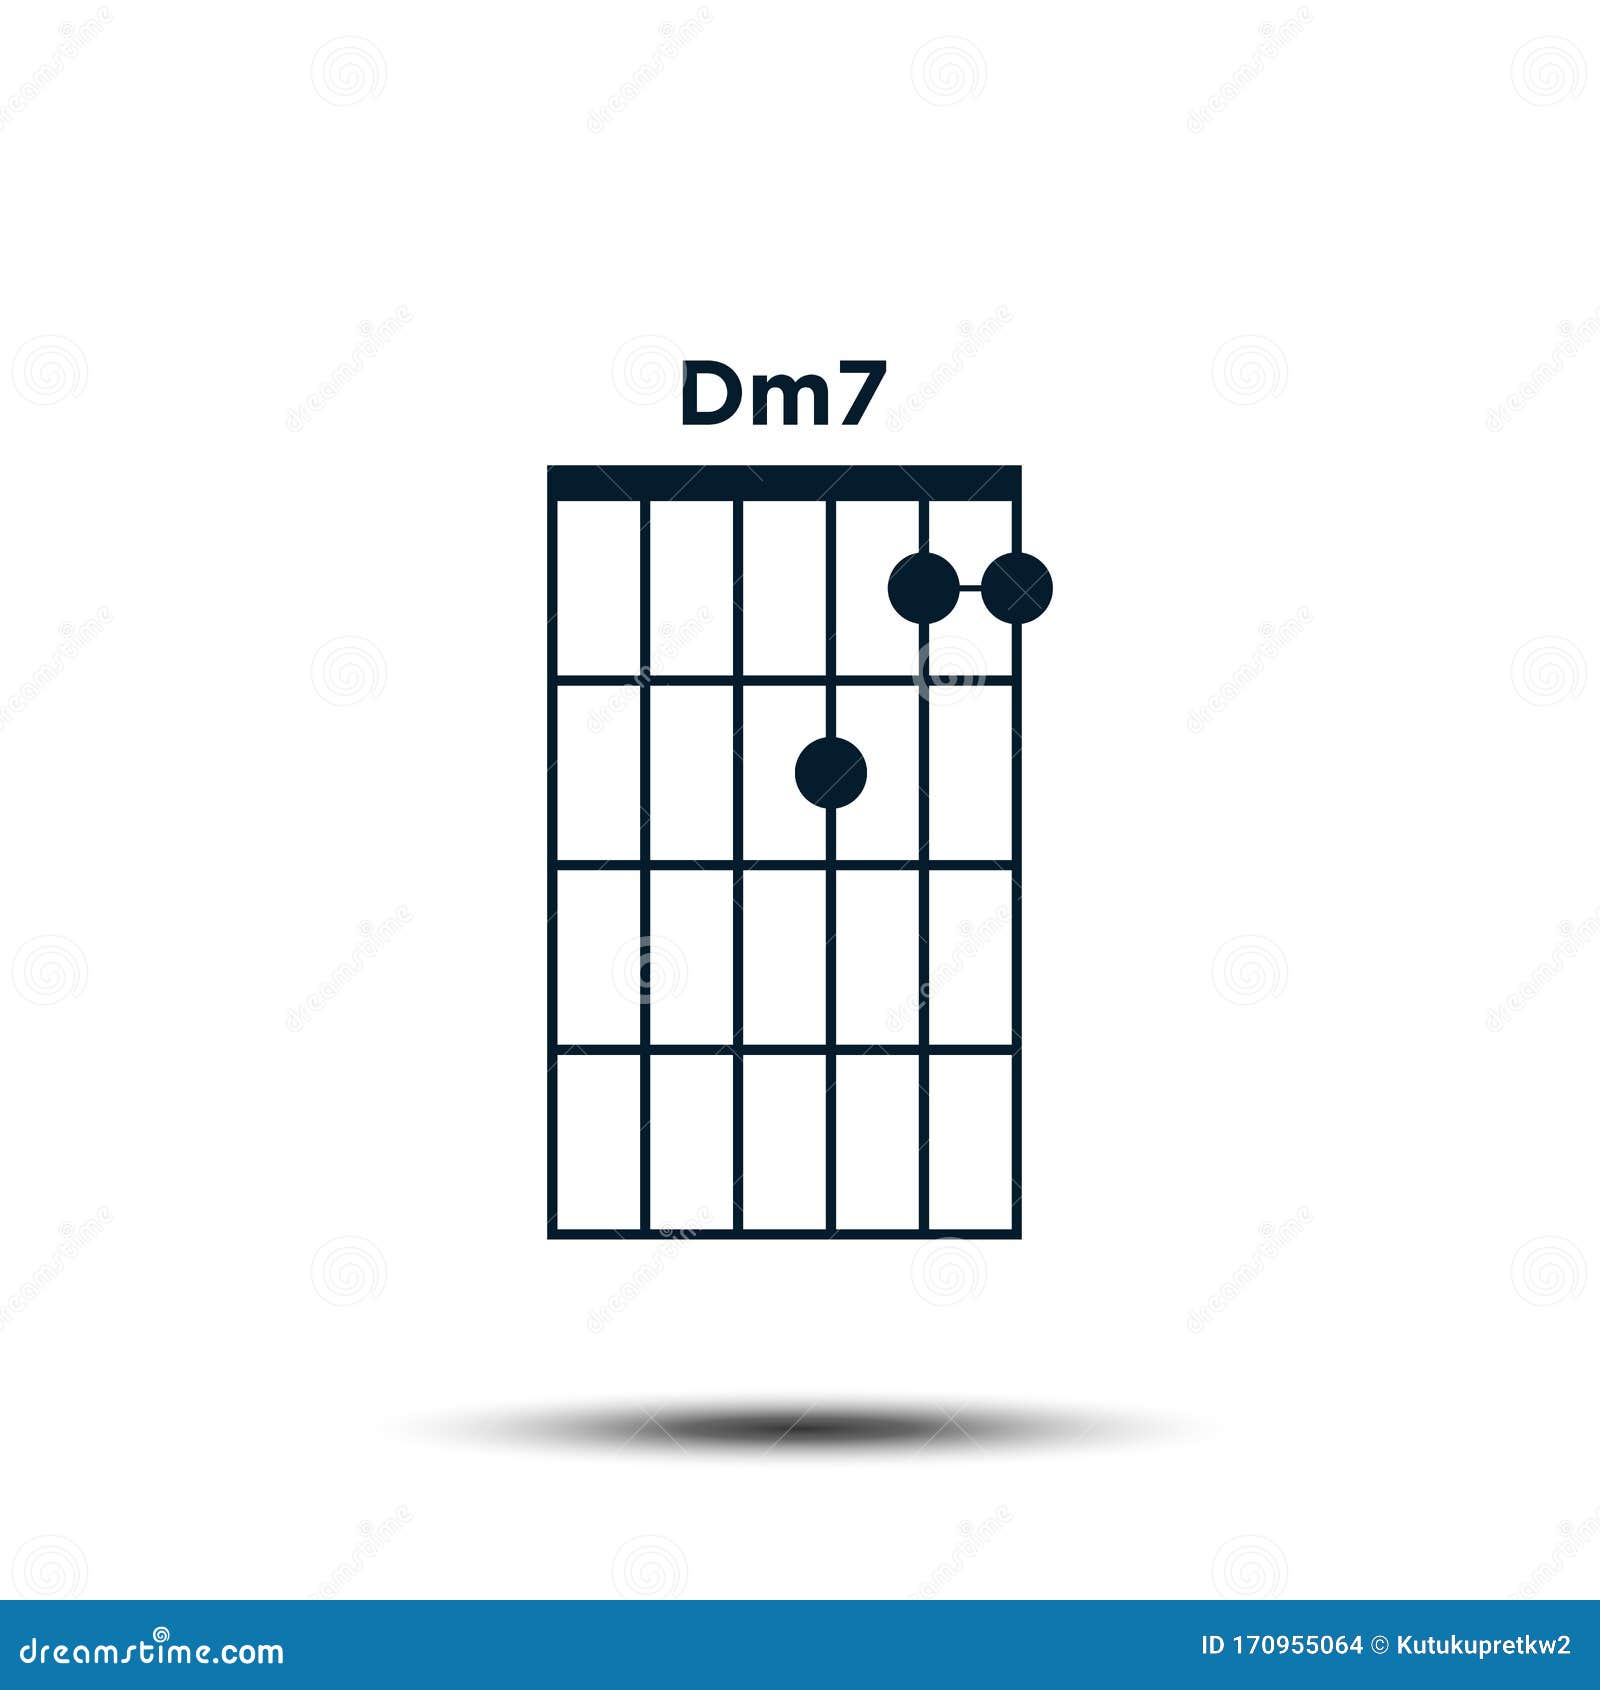 Learn How To Play The Dm7 Guitar Chord | Grow Guitar